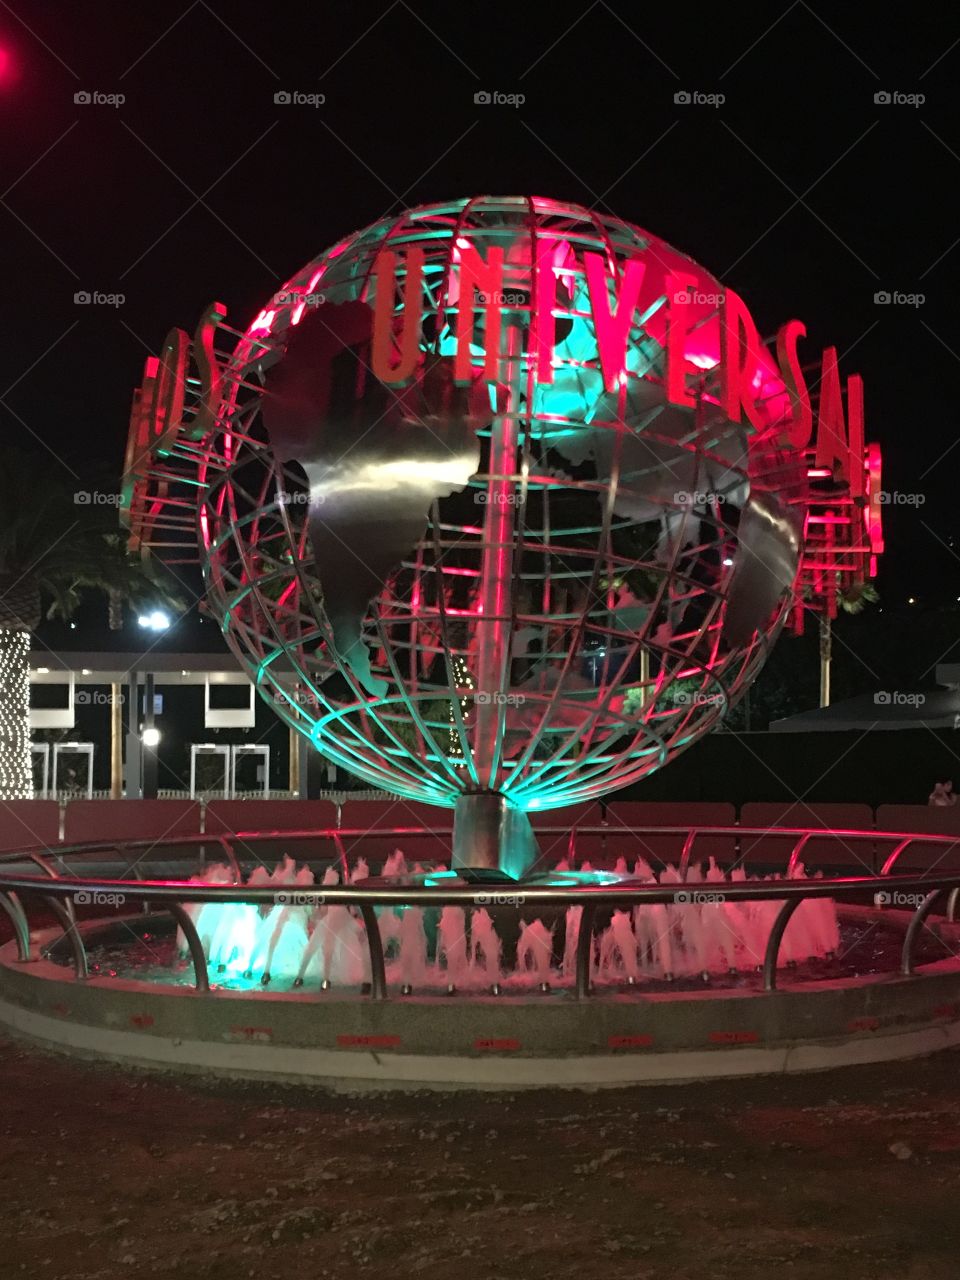 Universal globe